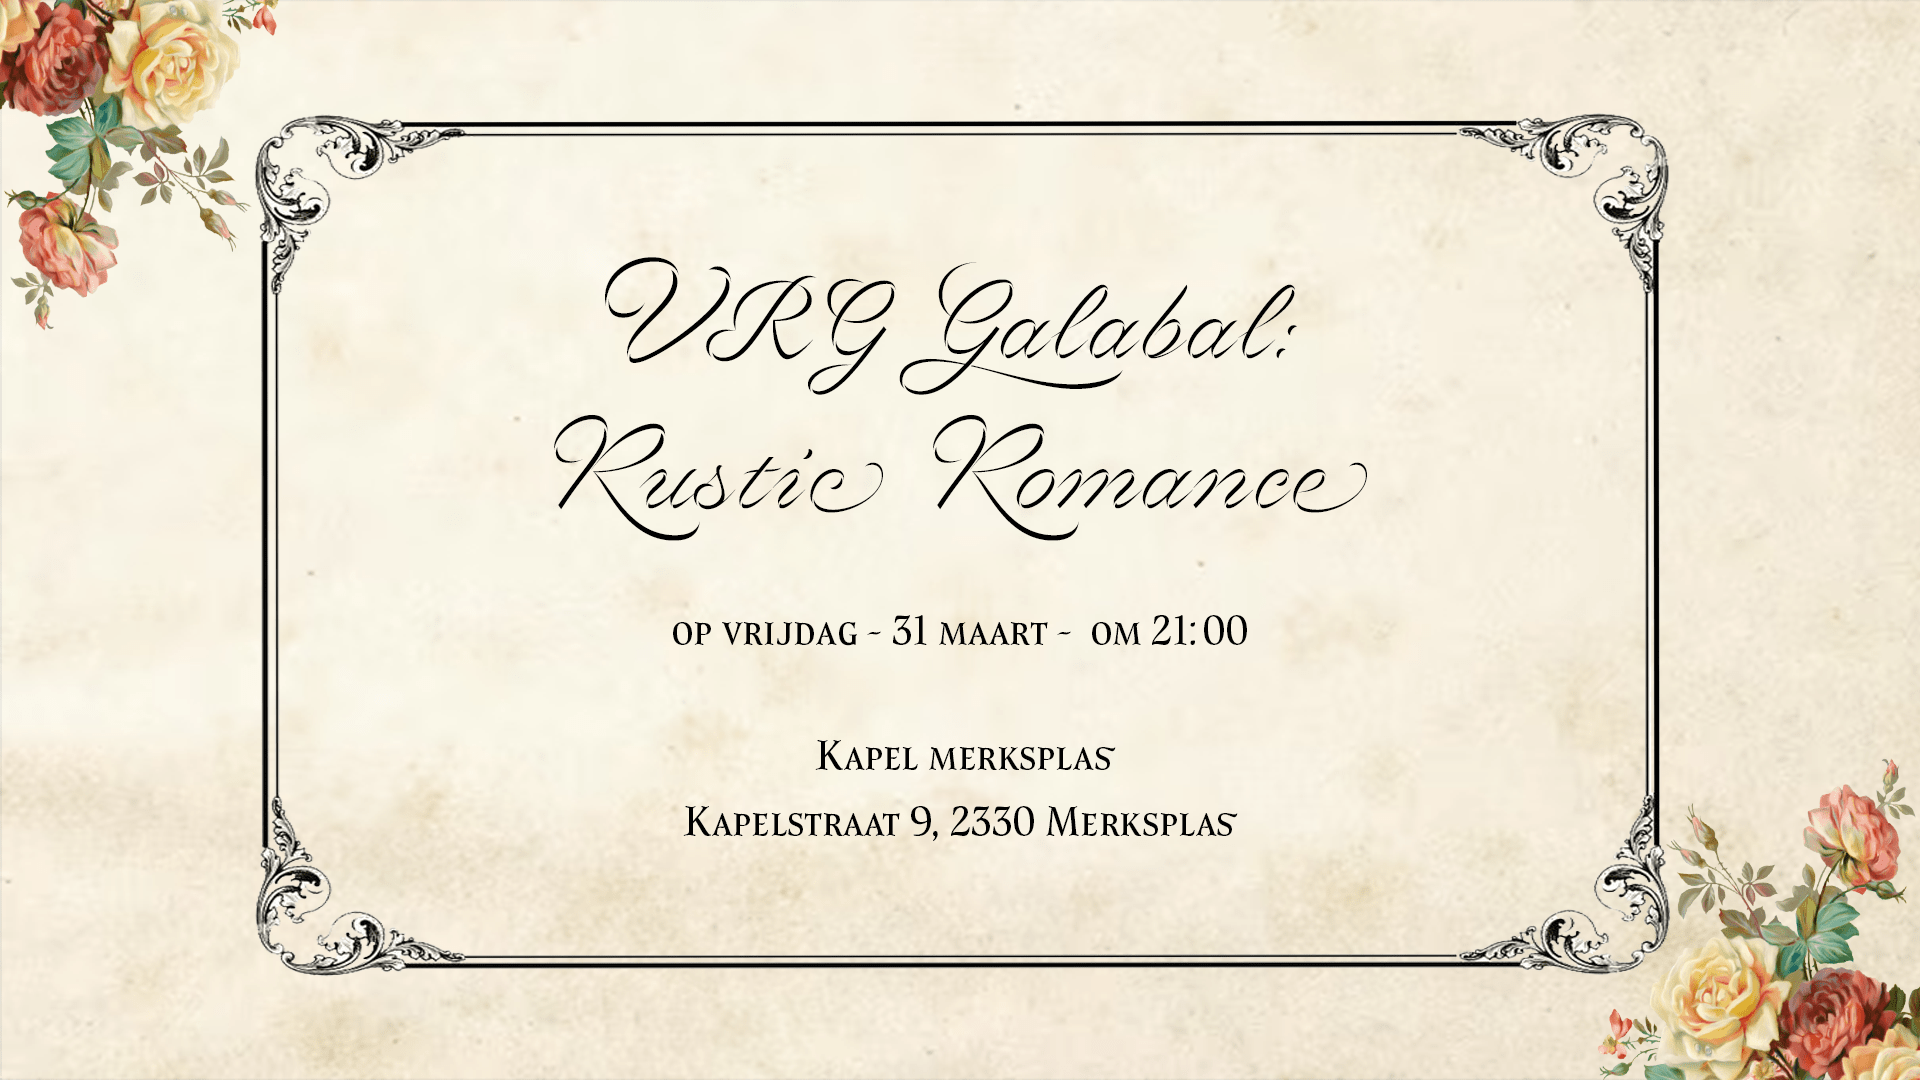 VRG Galabal: Rustic Romance